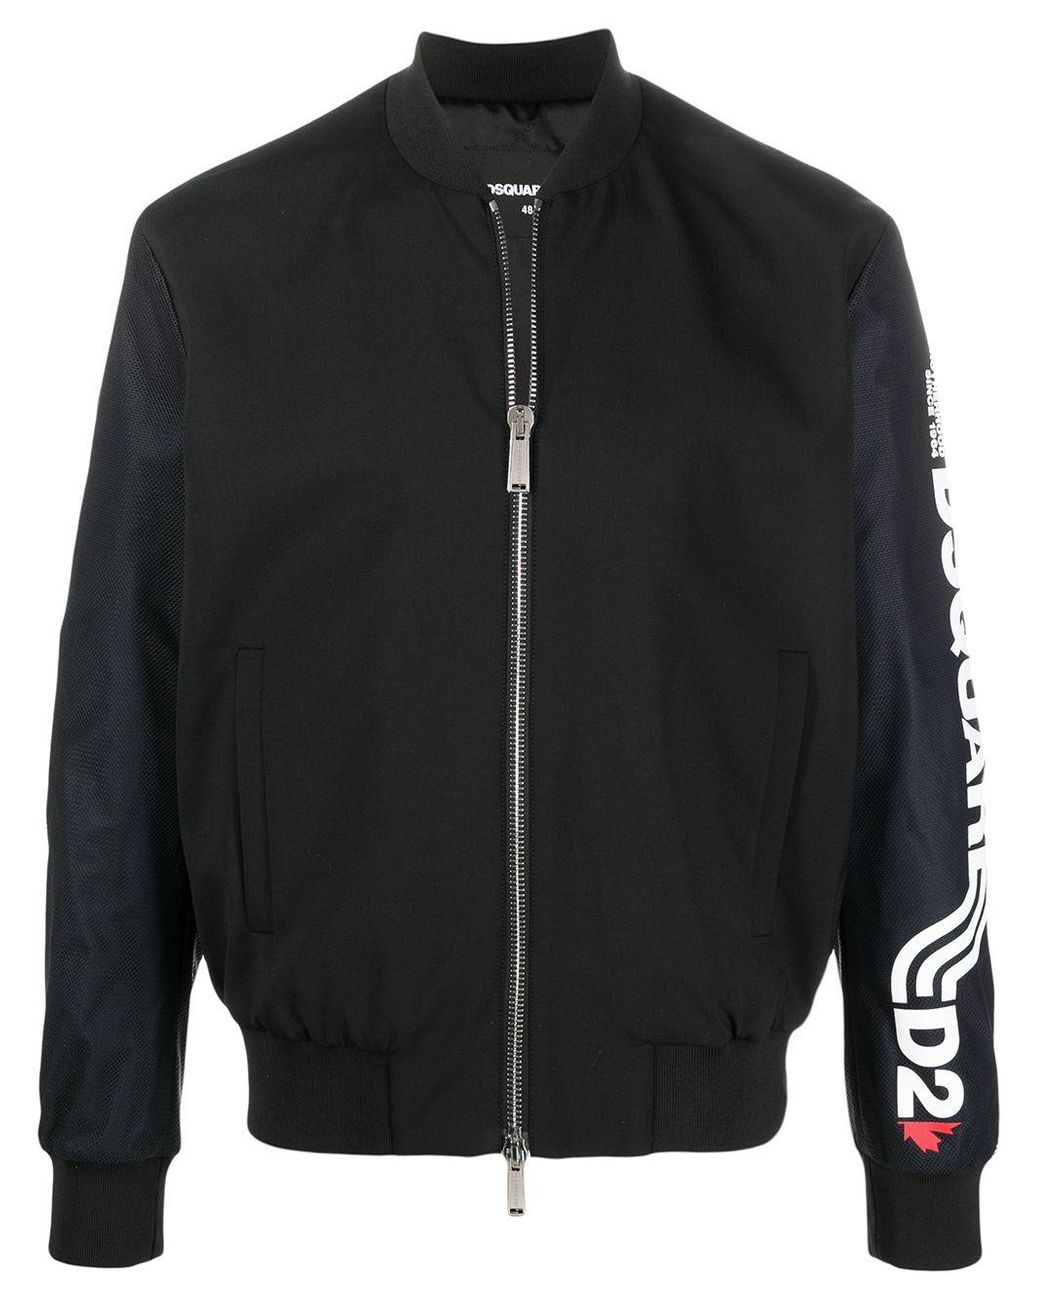 DSquared² Wool Logo-print Bomber Jacket in Black for Men - Lyst